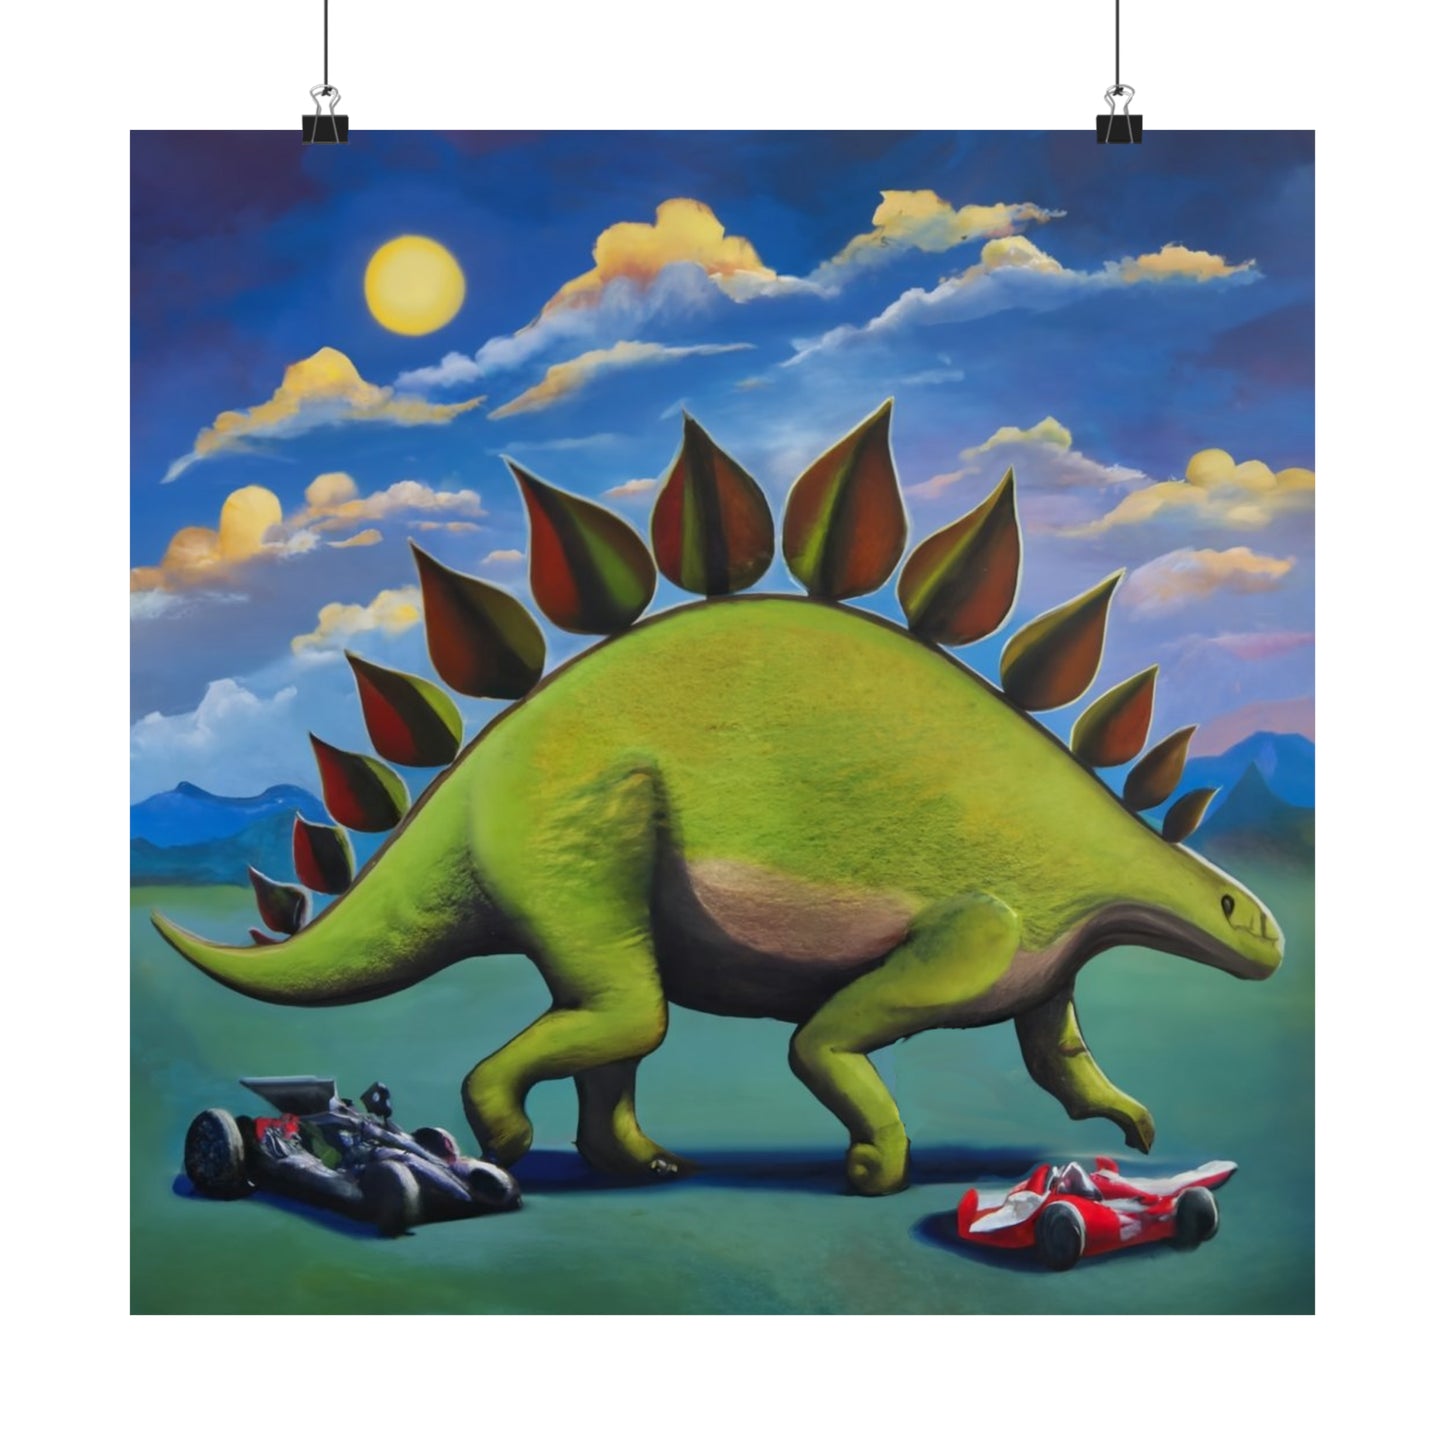 Stegosaurus Meets Indy Cars: Cute Abstract Wall Art